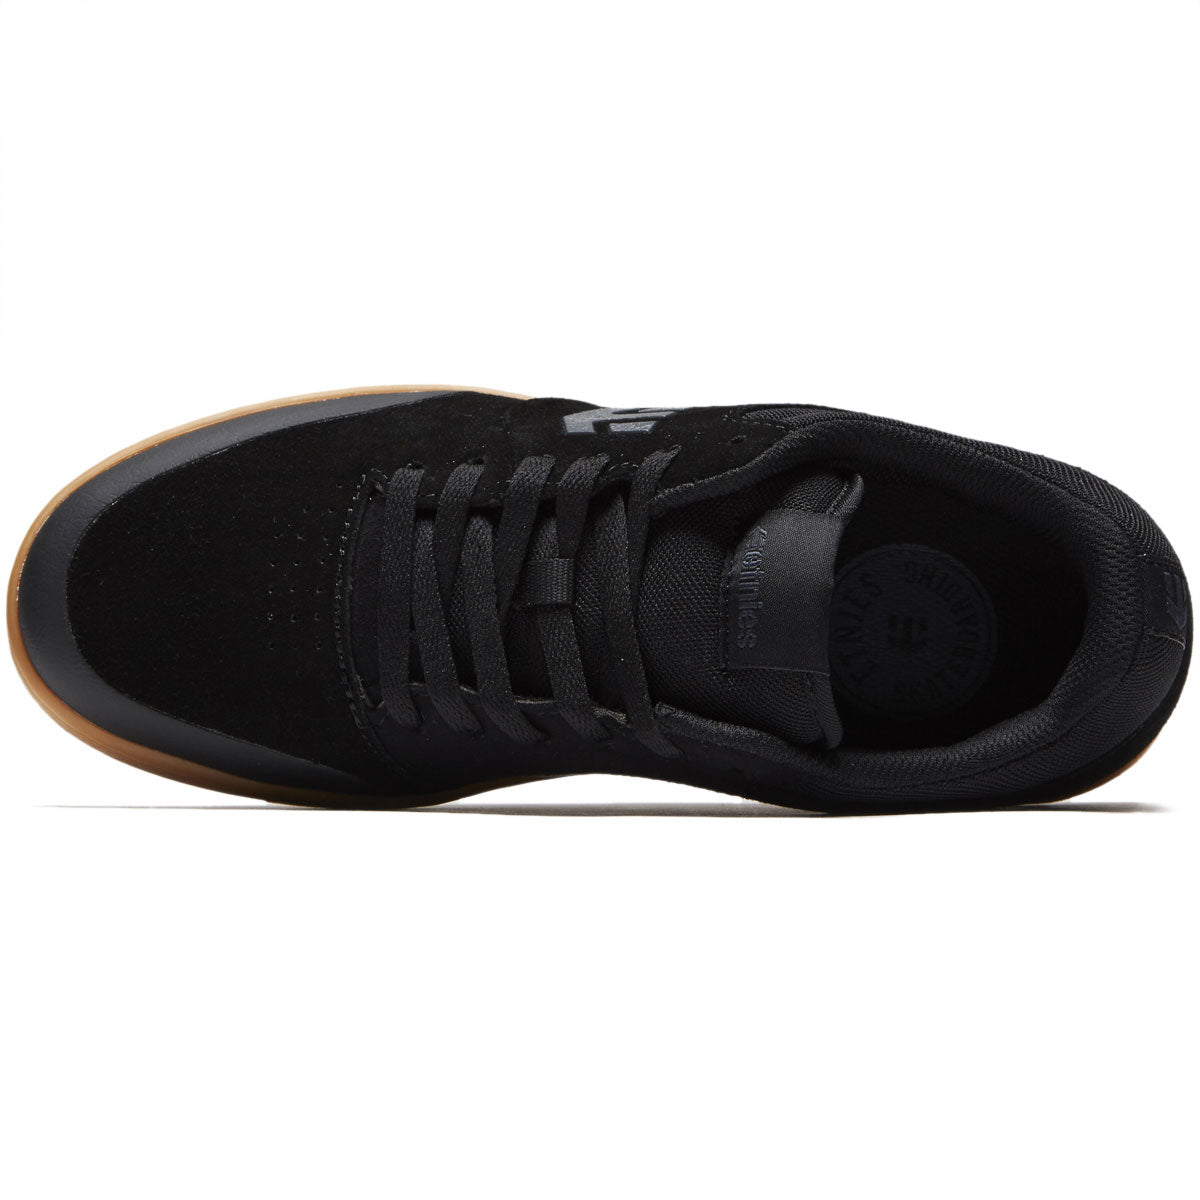 Etnies Marana Shoes - Black/Dark Grey/Gum image 3